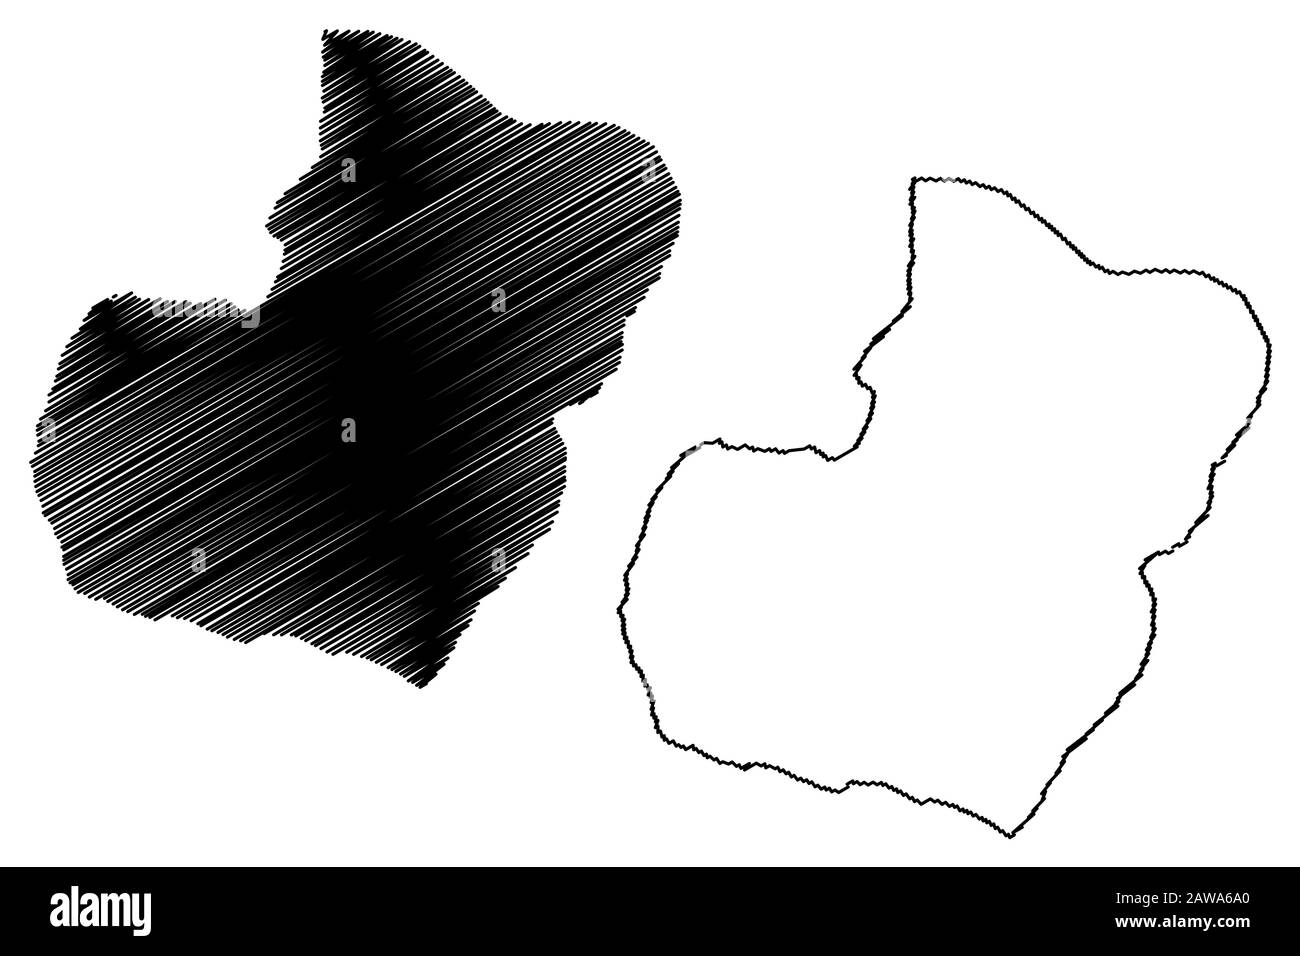 Bioko Sur (Republic of Equatorial Guinea, Provinces of Equatorial Guinea) map vector illustration, scribble sketch Bioko Sur Province (Bioko island) m Stock Vector